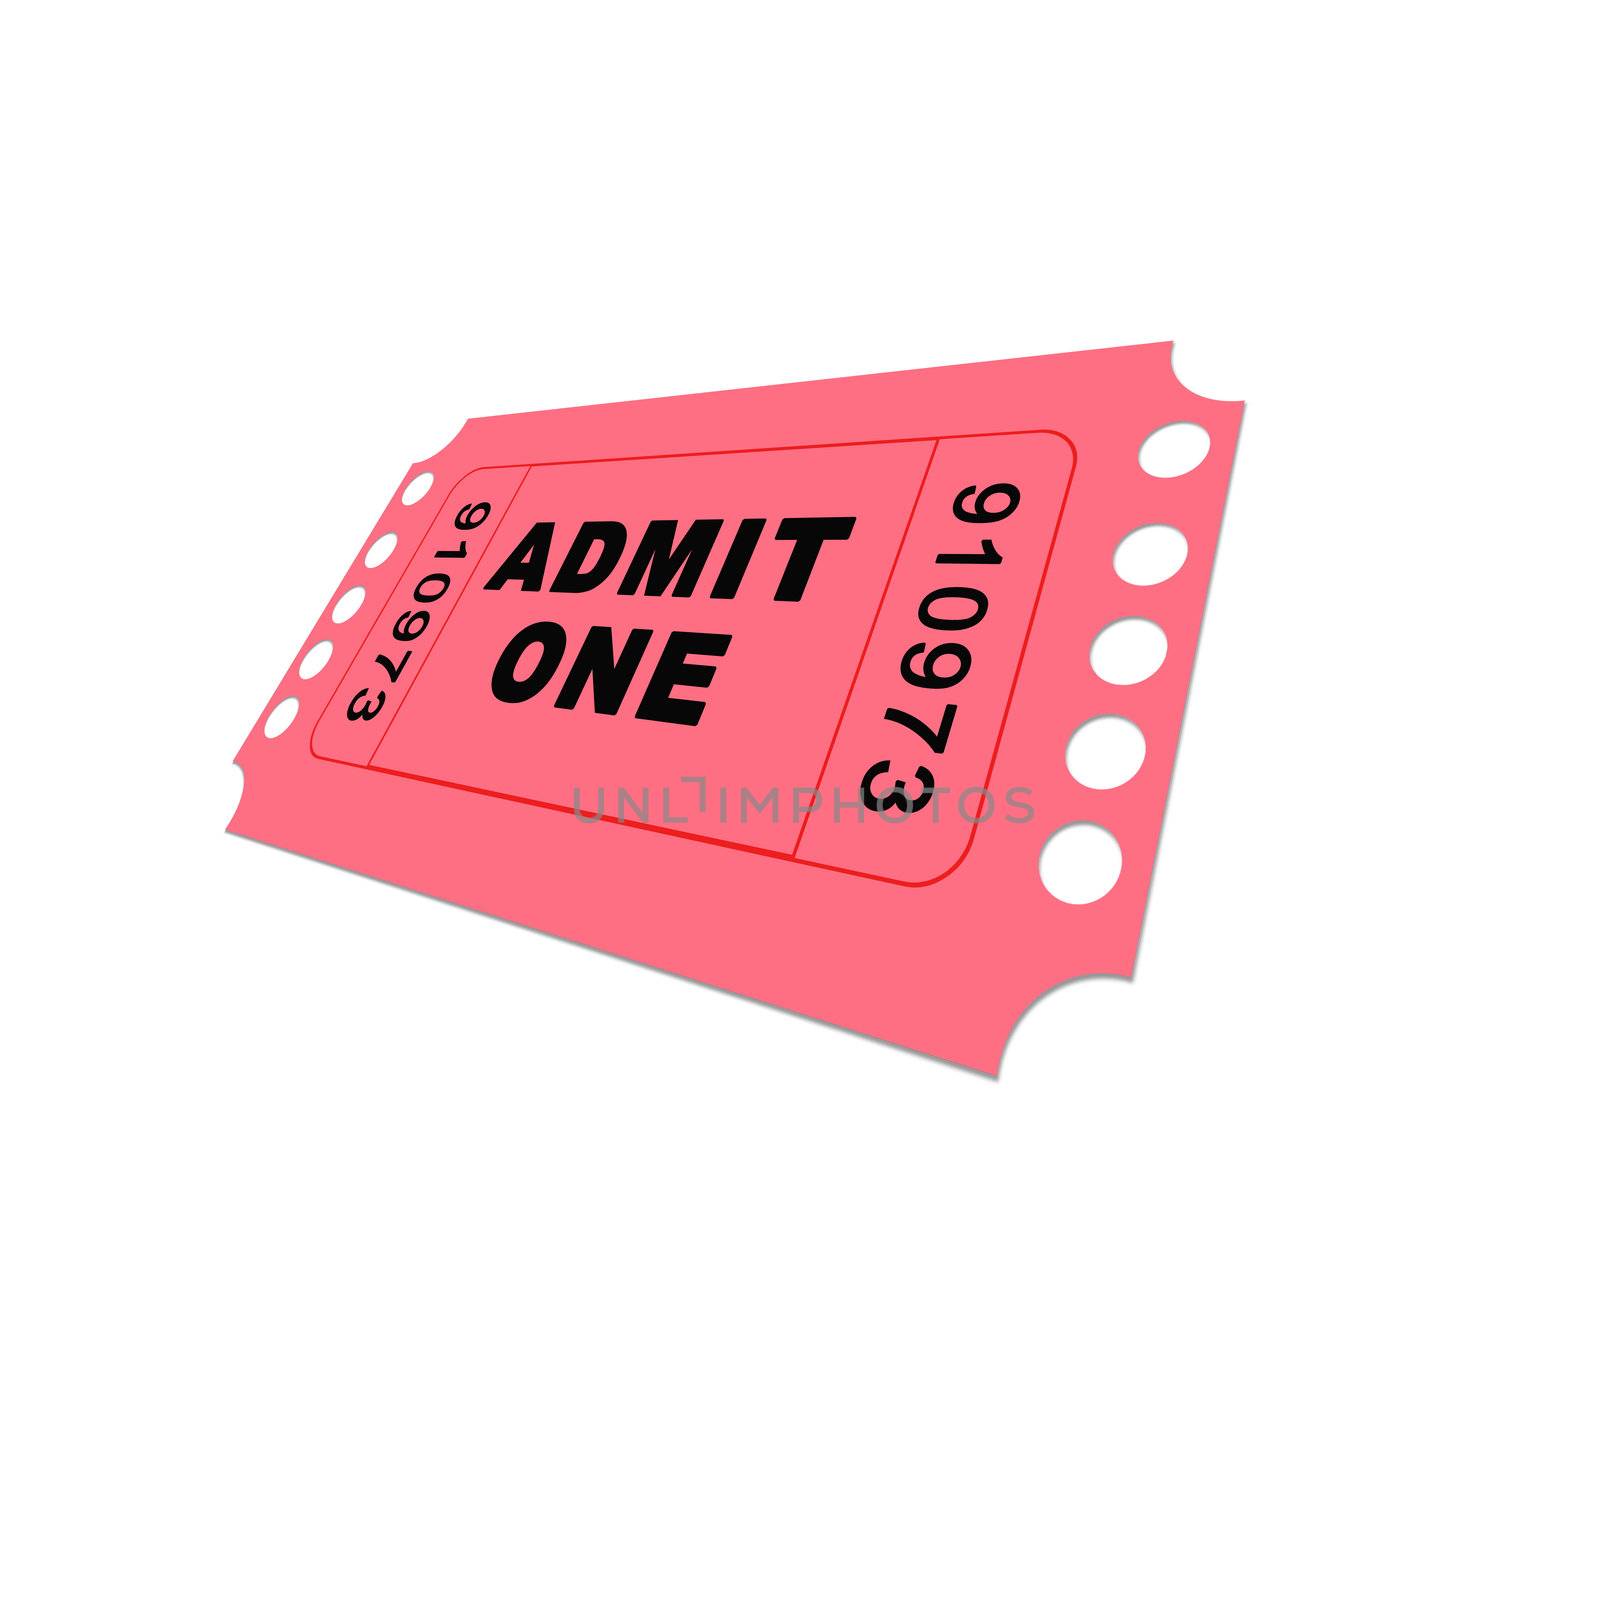 Cinema Ticket admit one - illustration high resolution digital.